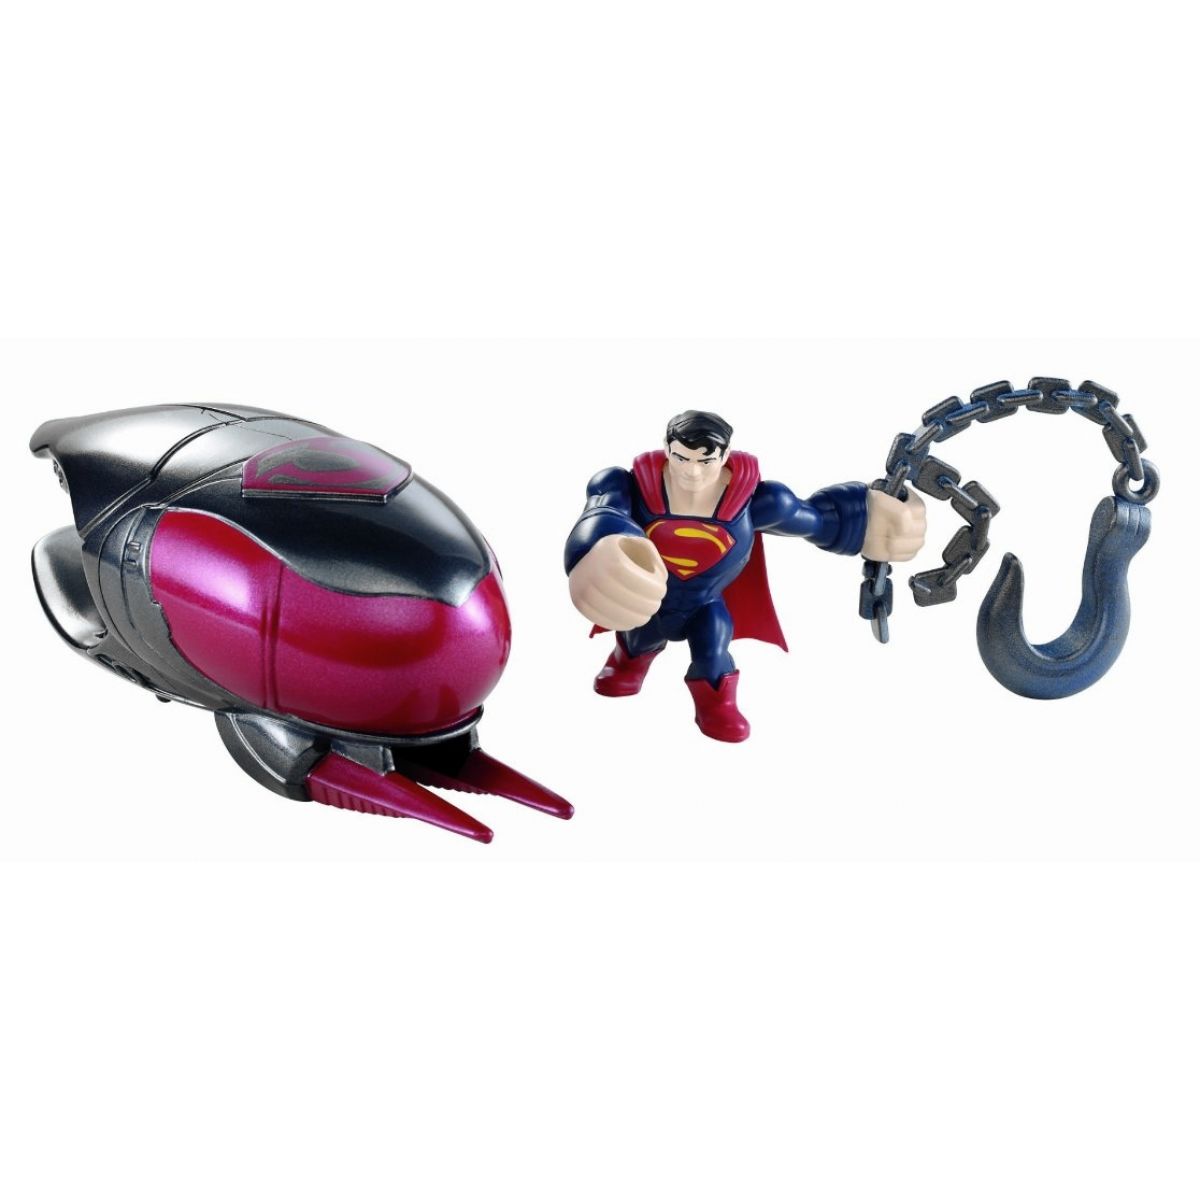 Mattel Superman exploders figurky a vozidla - Cruiser Smash Battle Pack